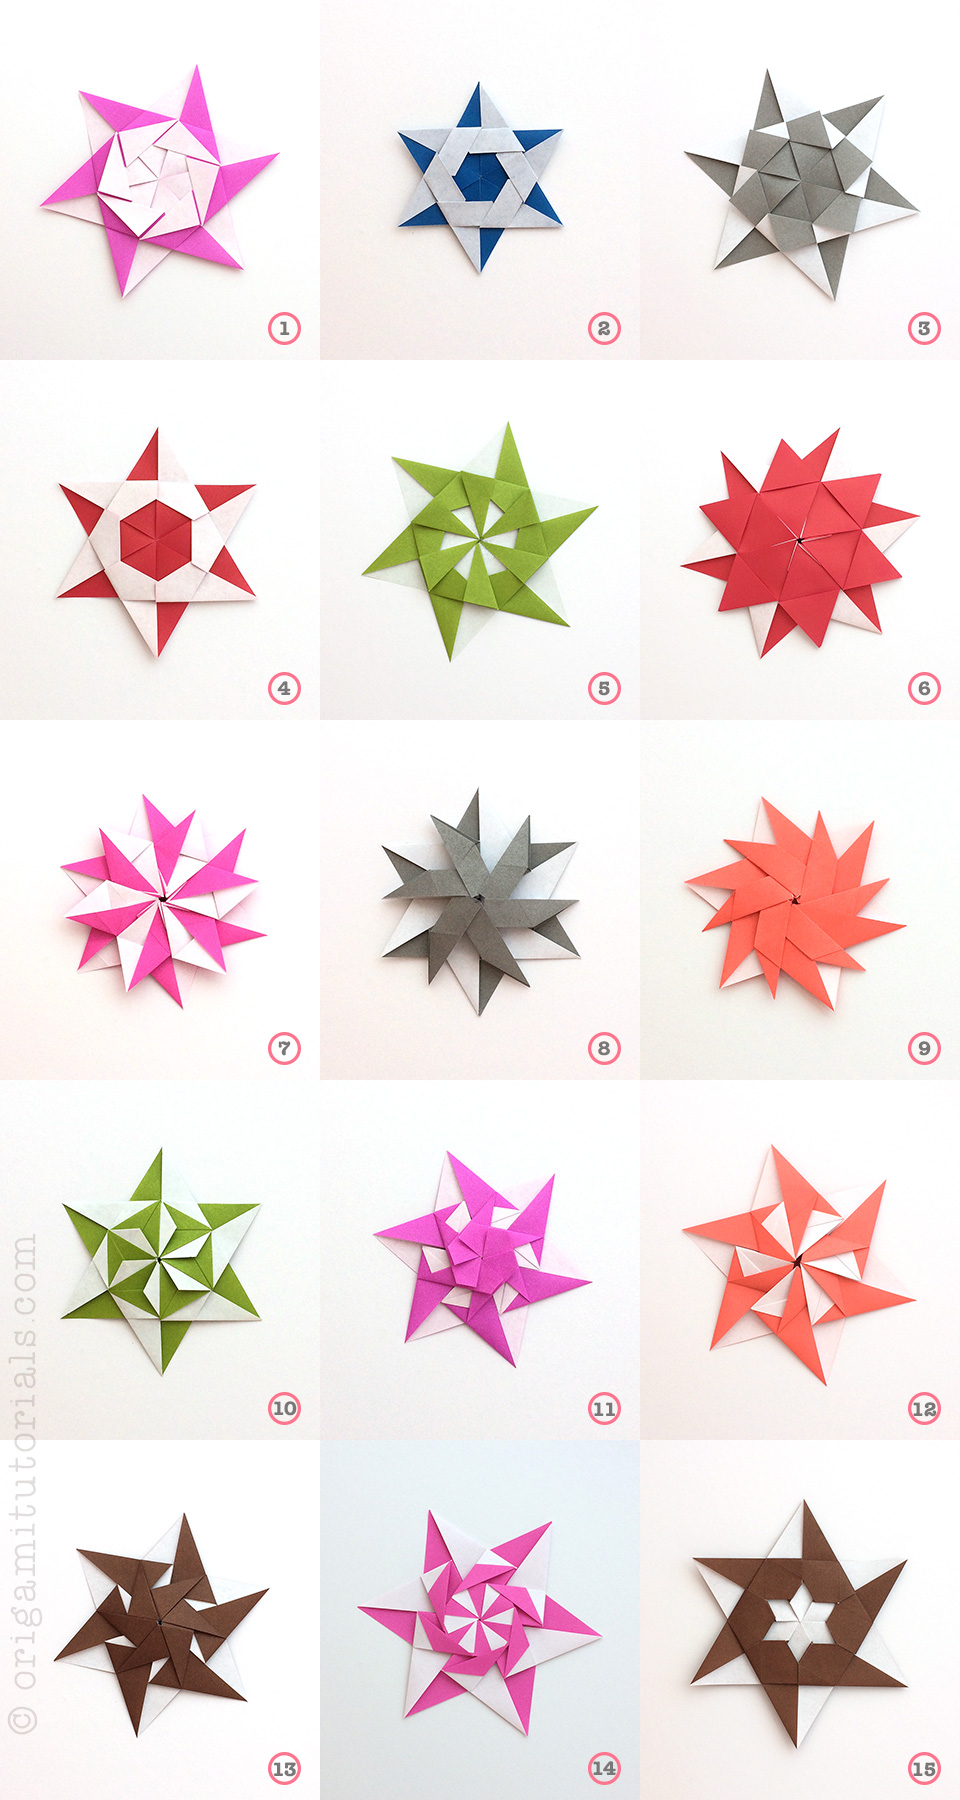 Easy Origami Star 15 Chameleon Origami Stars Tutorial Origami Tutorials